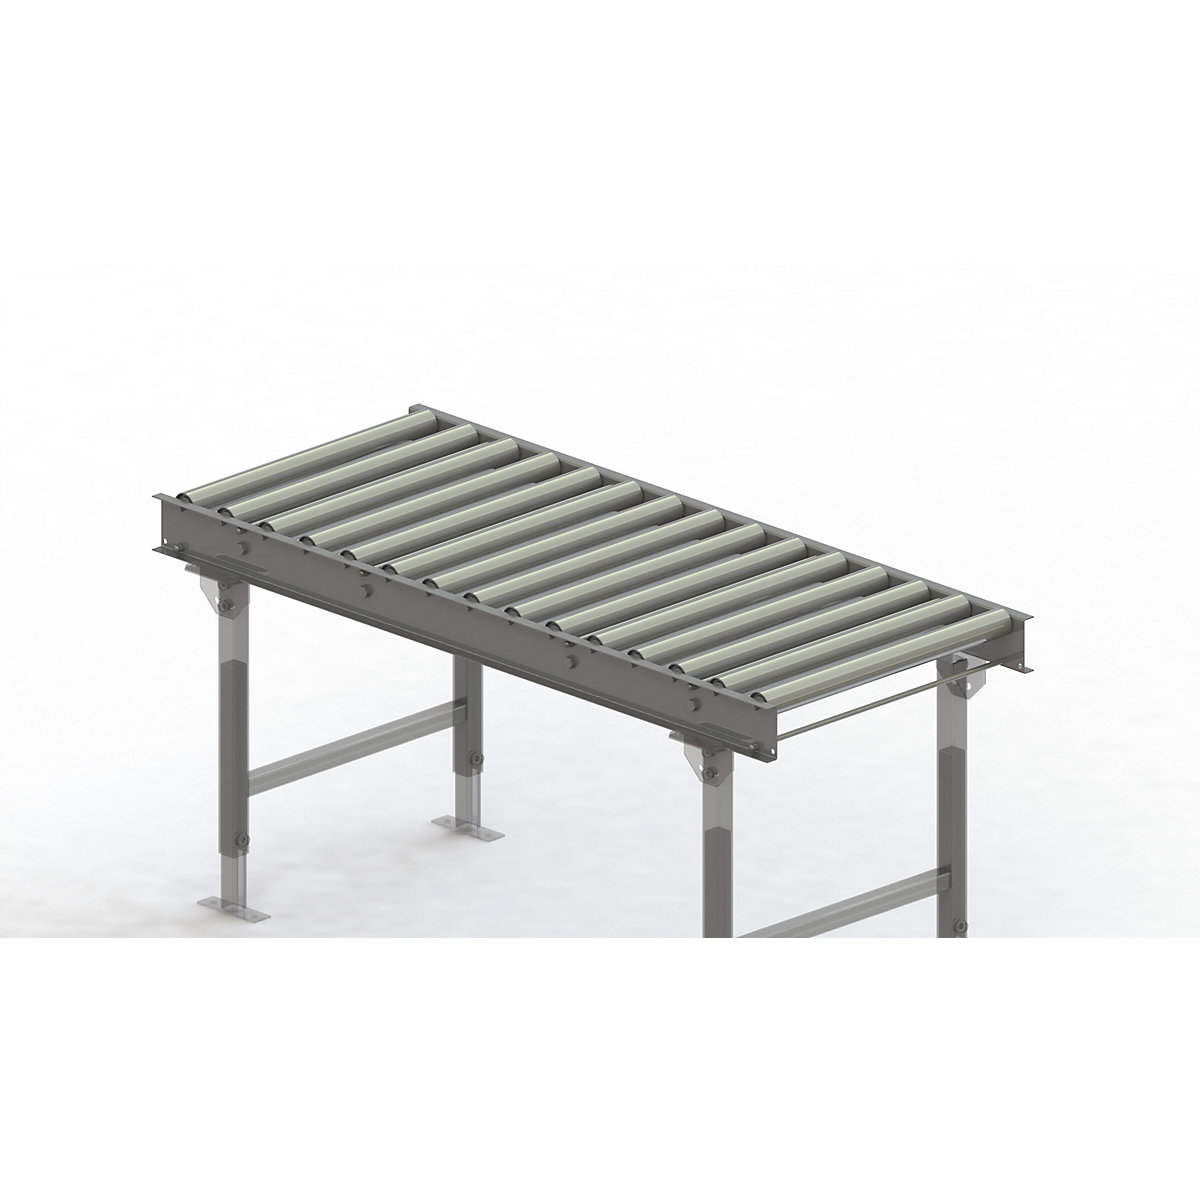 Roller conveyor, steel frame with zinc plated steel rollers – Gura, track width 600 mm, distance between axles 100 mm, length 1.5 m-5